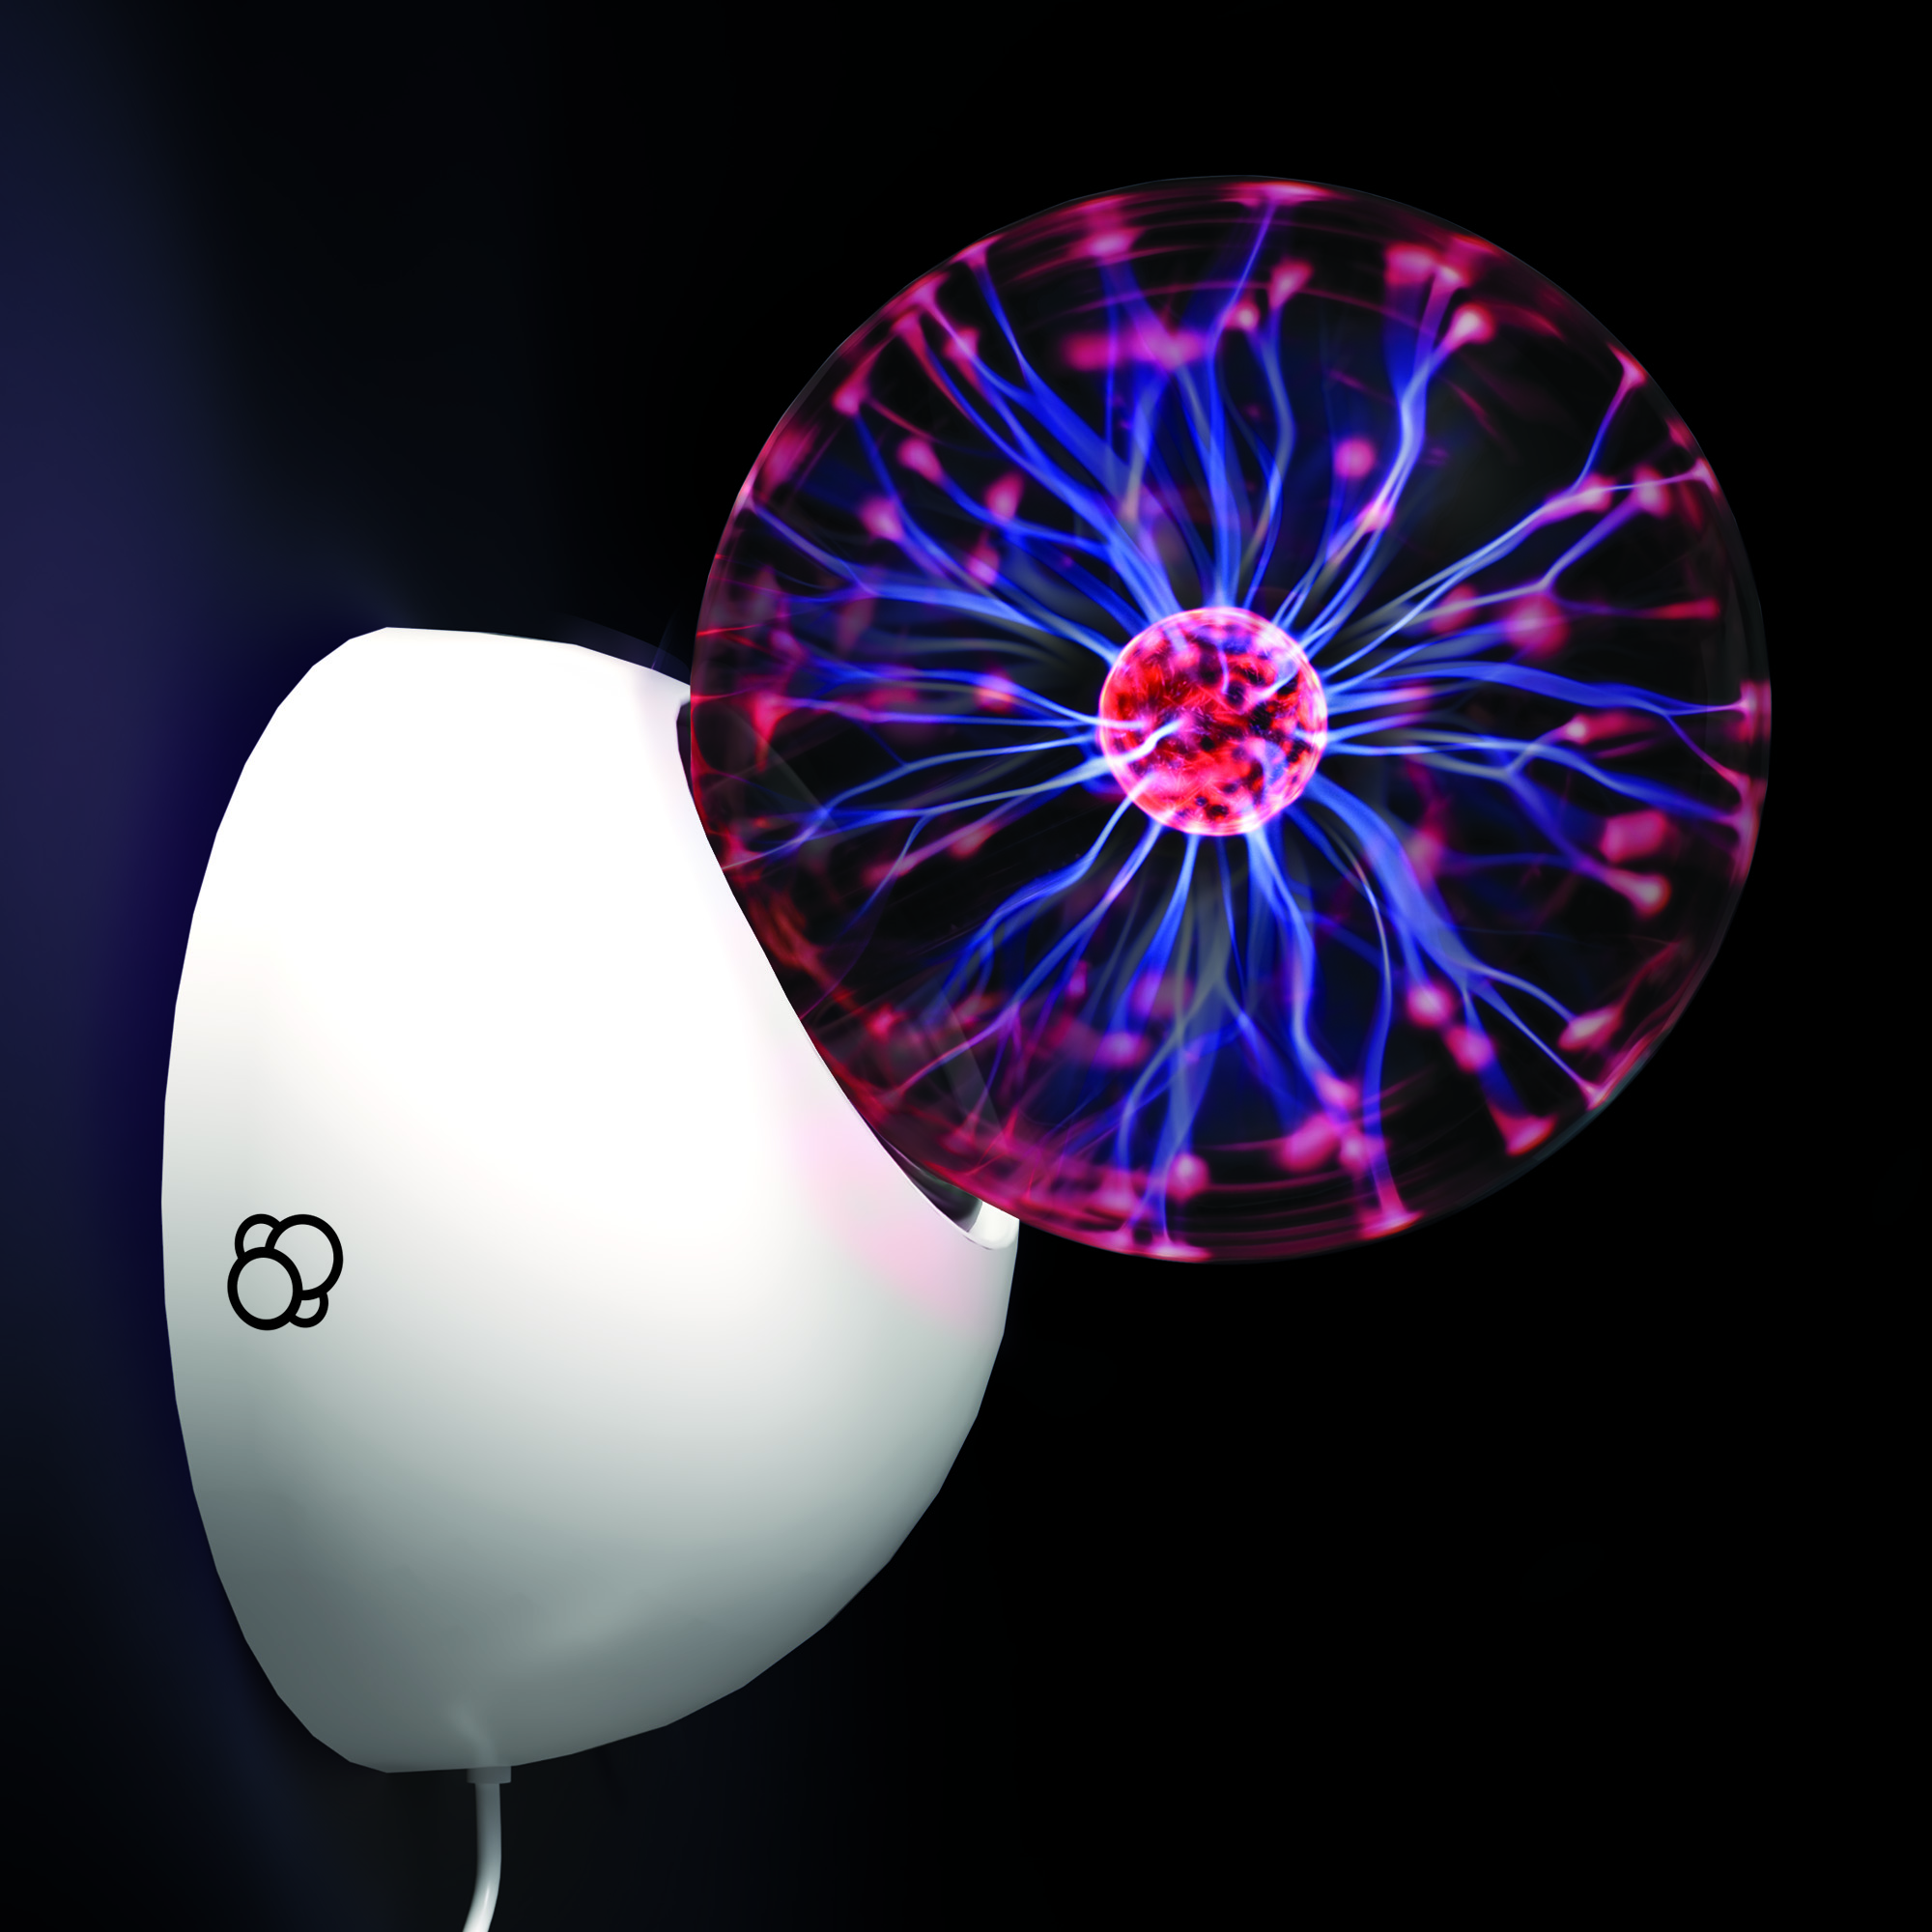 LITLAMP™ - Magic Plasma Ball - ZULIE E-COMMERCE LLC DBA LIT LAMP